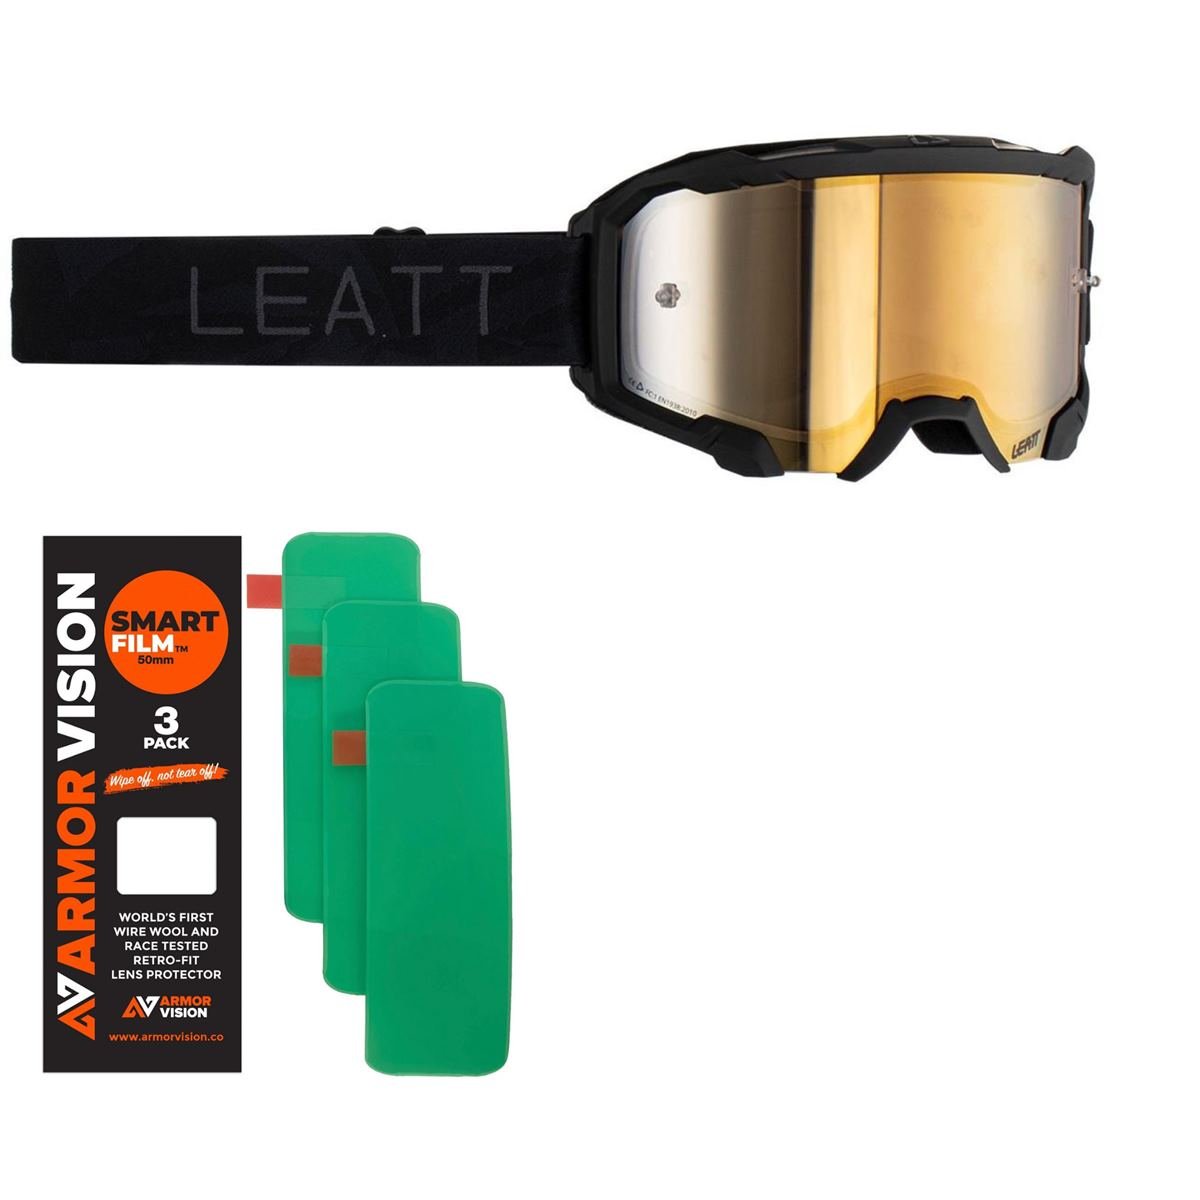 Leatt Masque Velocity 4.5 Set: 2 pièces, Stealth+ Smart Film Lens Protector